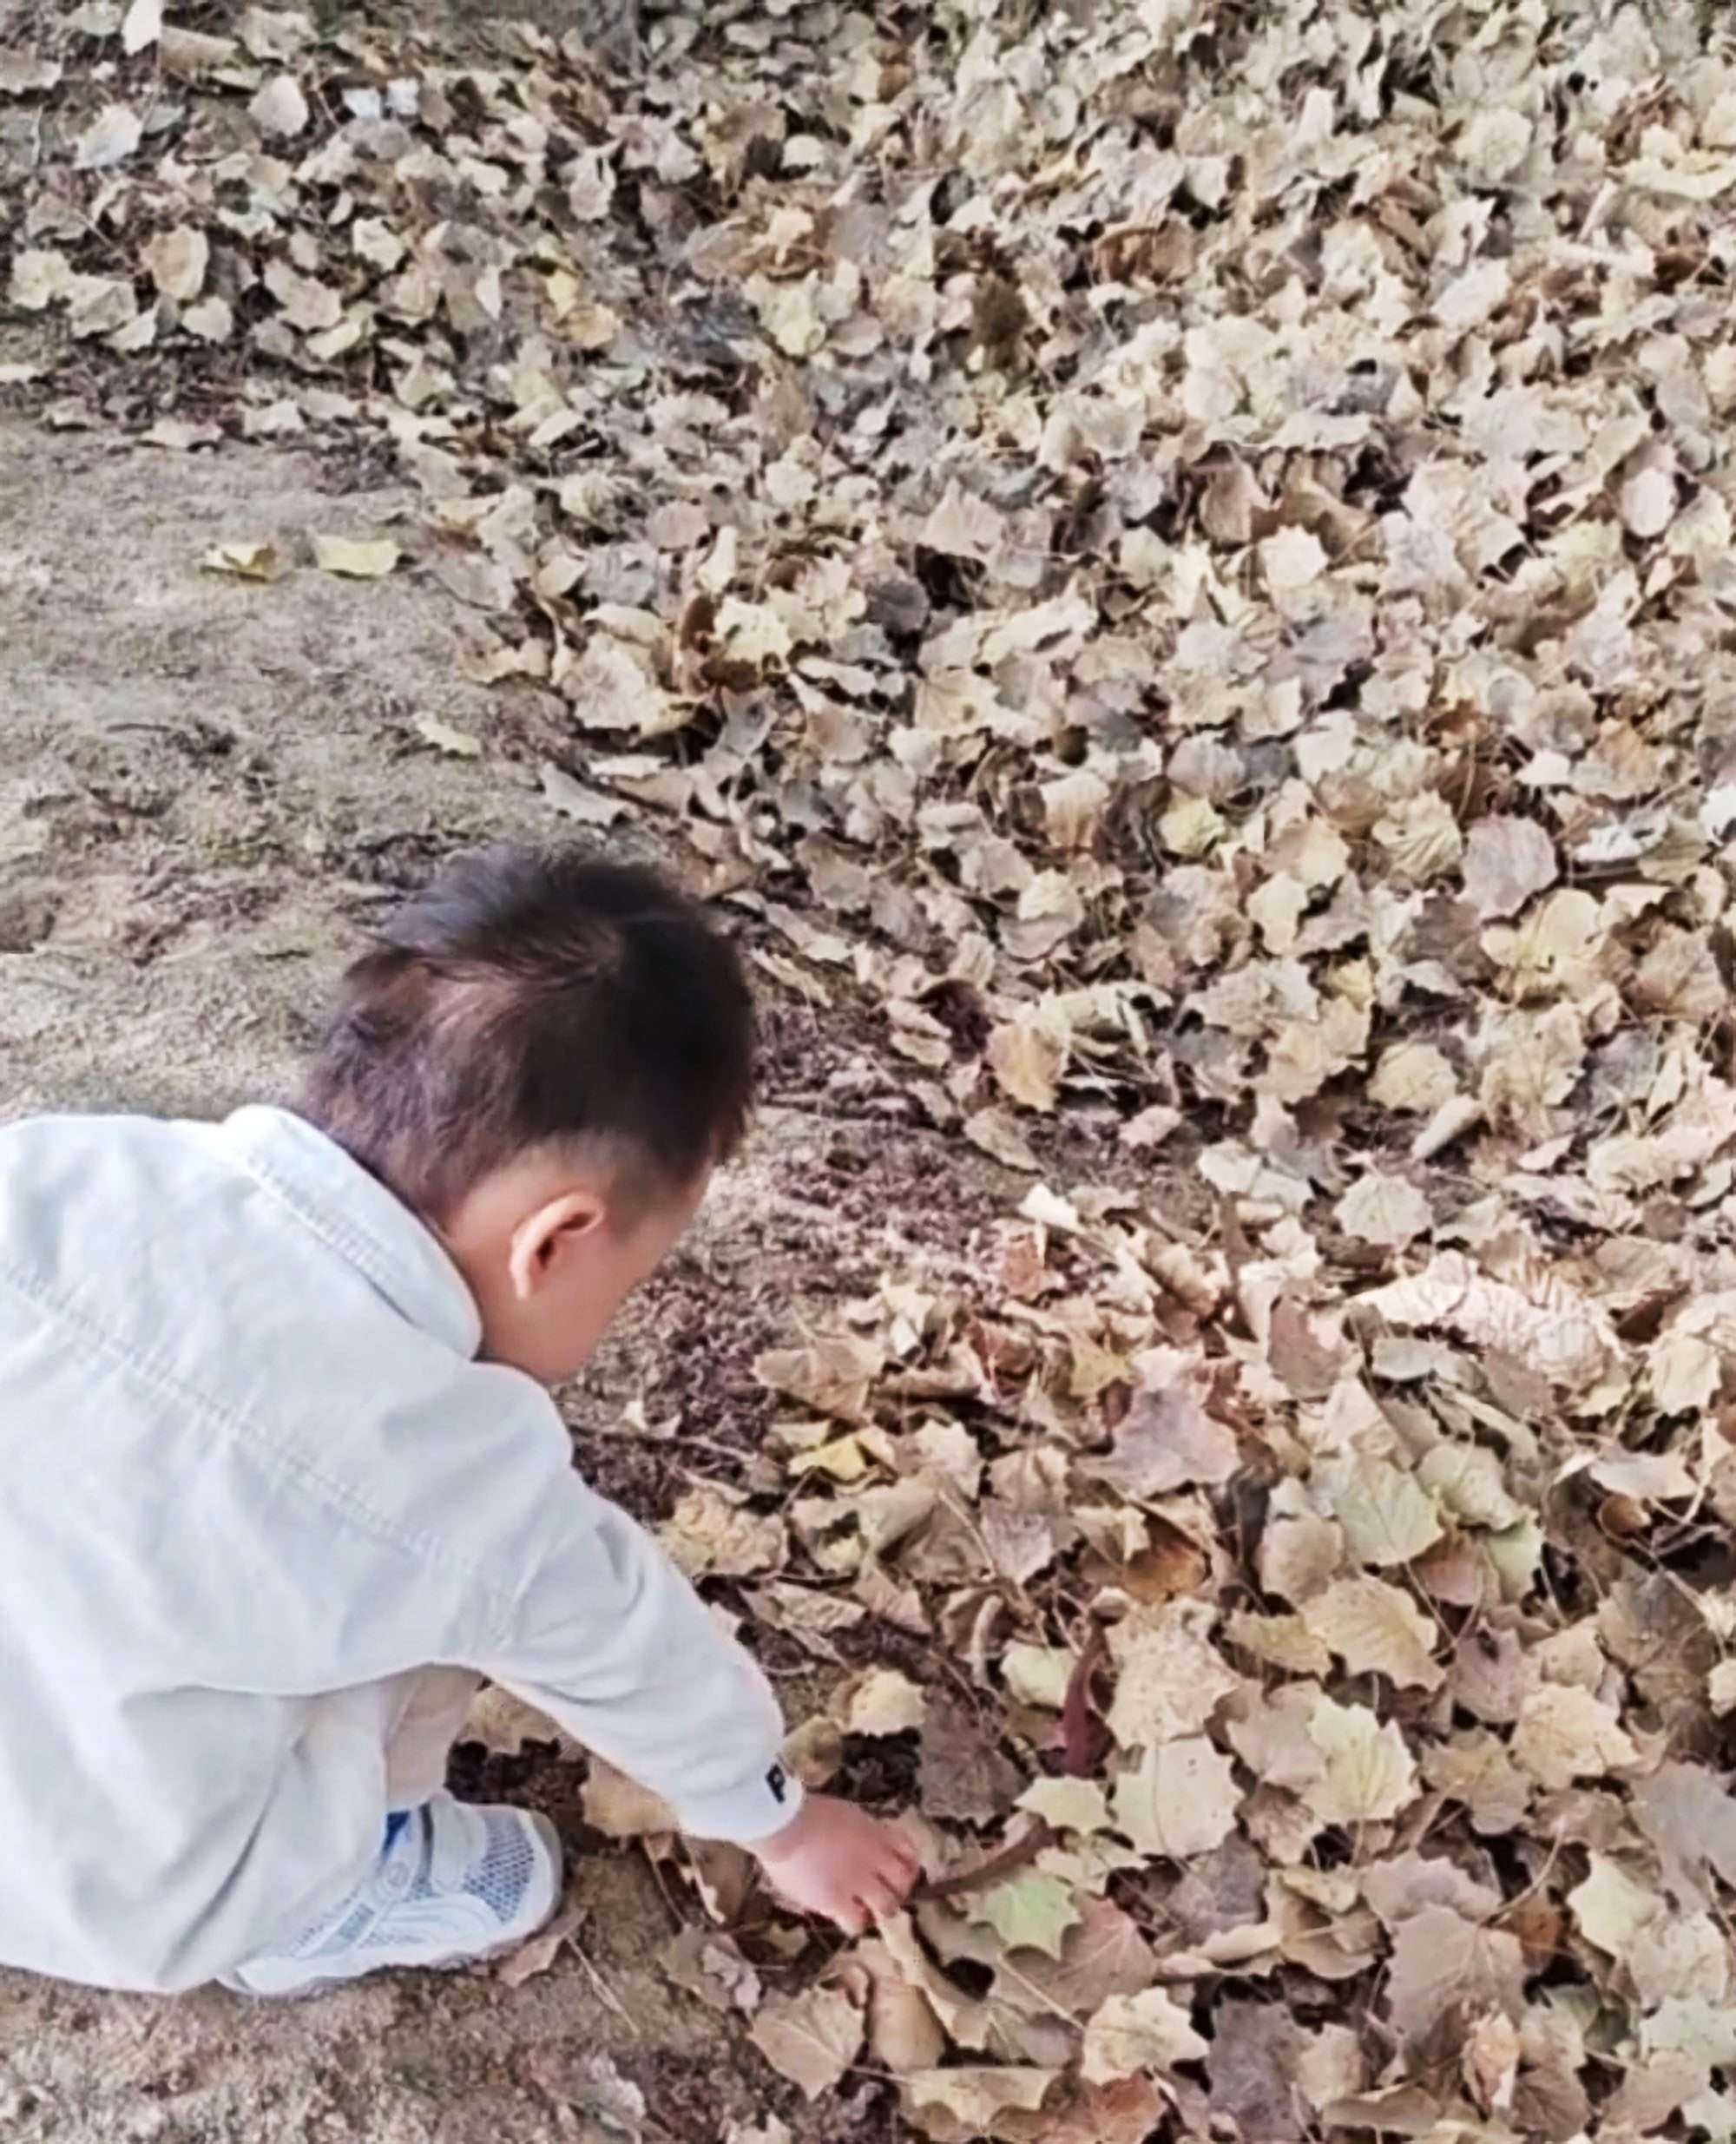 Mushroom-Hunting Child Finds A Live Snake Instead